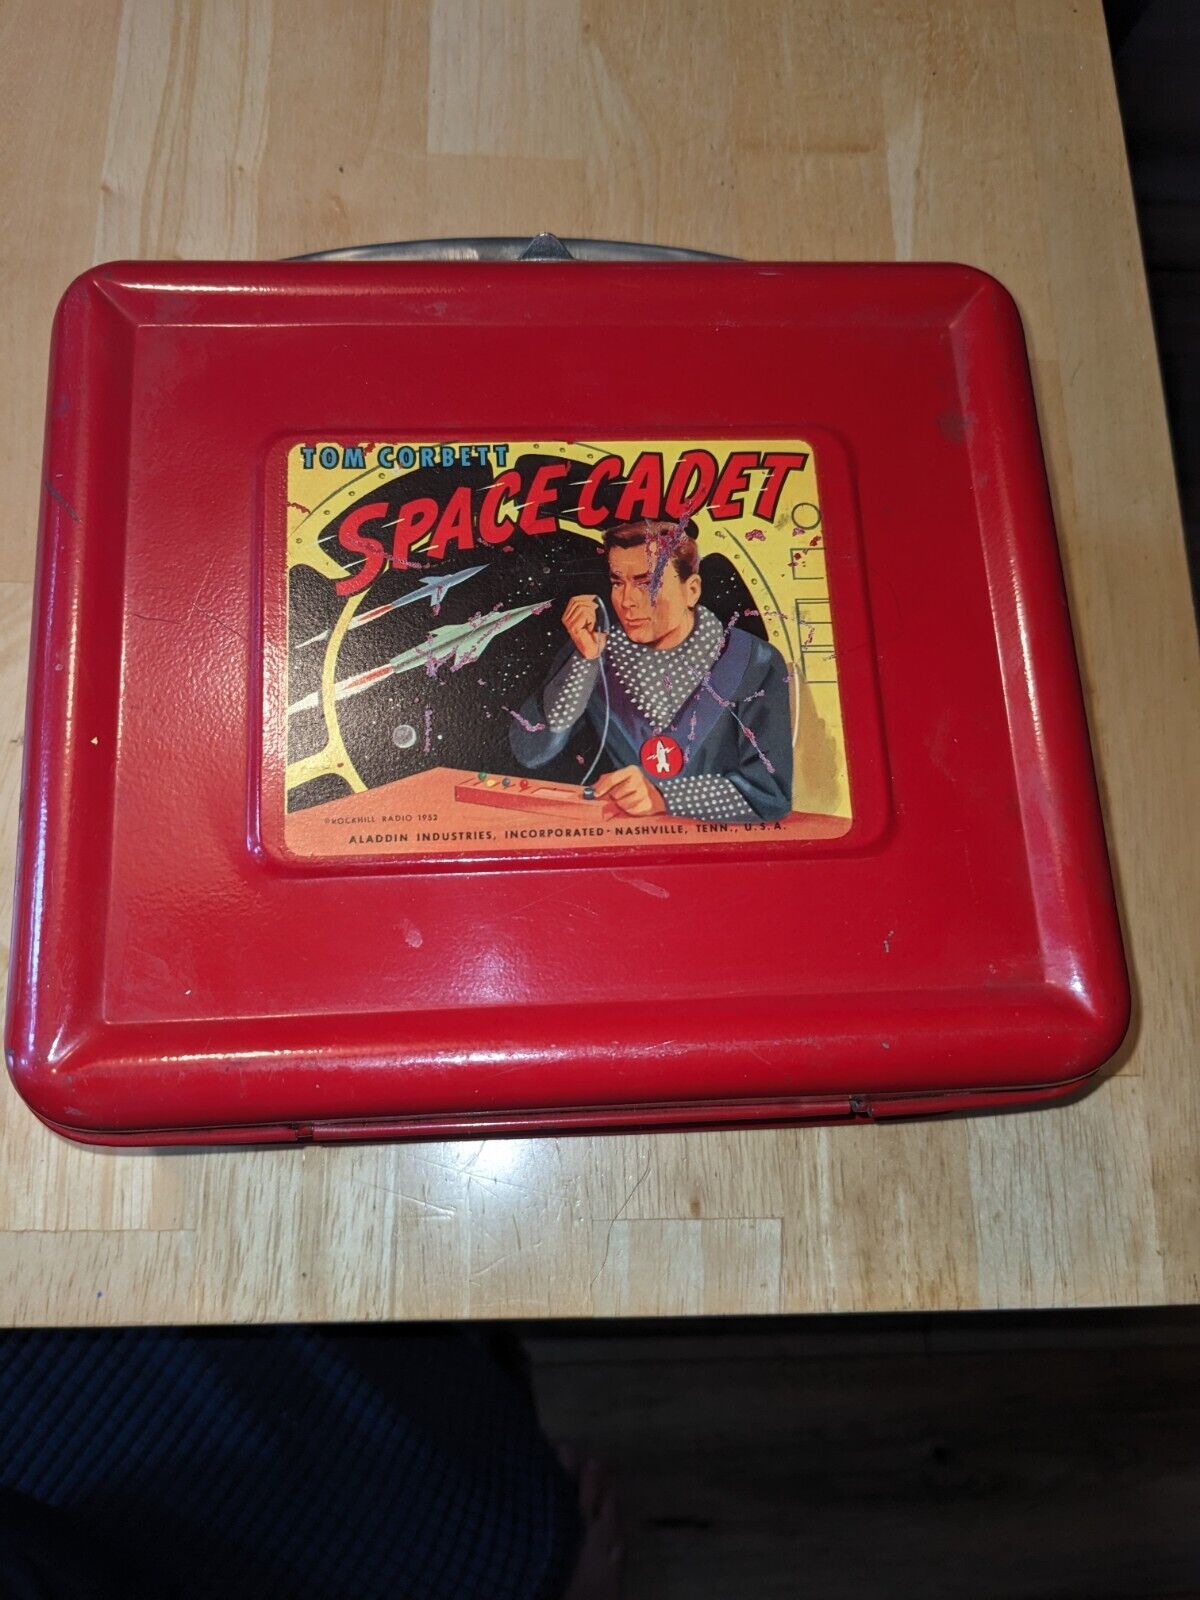 Vtg 1952 Aladdin Industries Tom Corbett Space Cadet Tin Metal Lunch Box USA